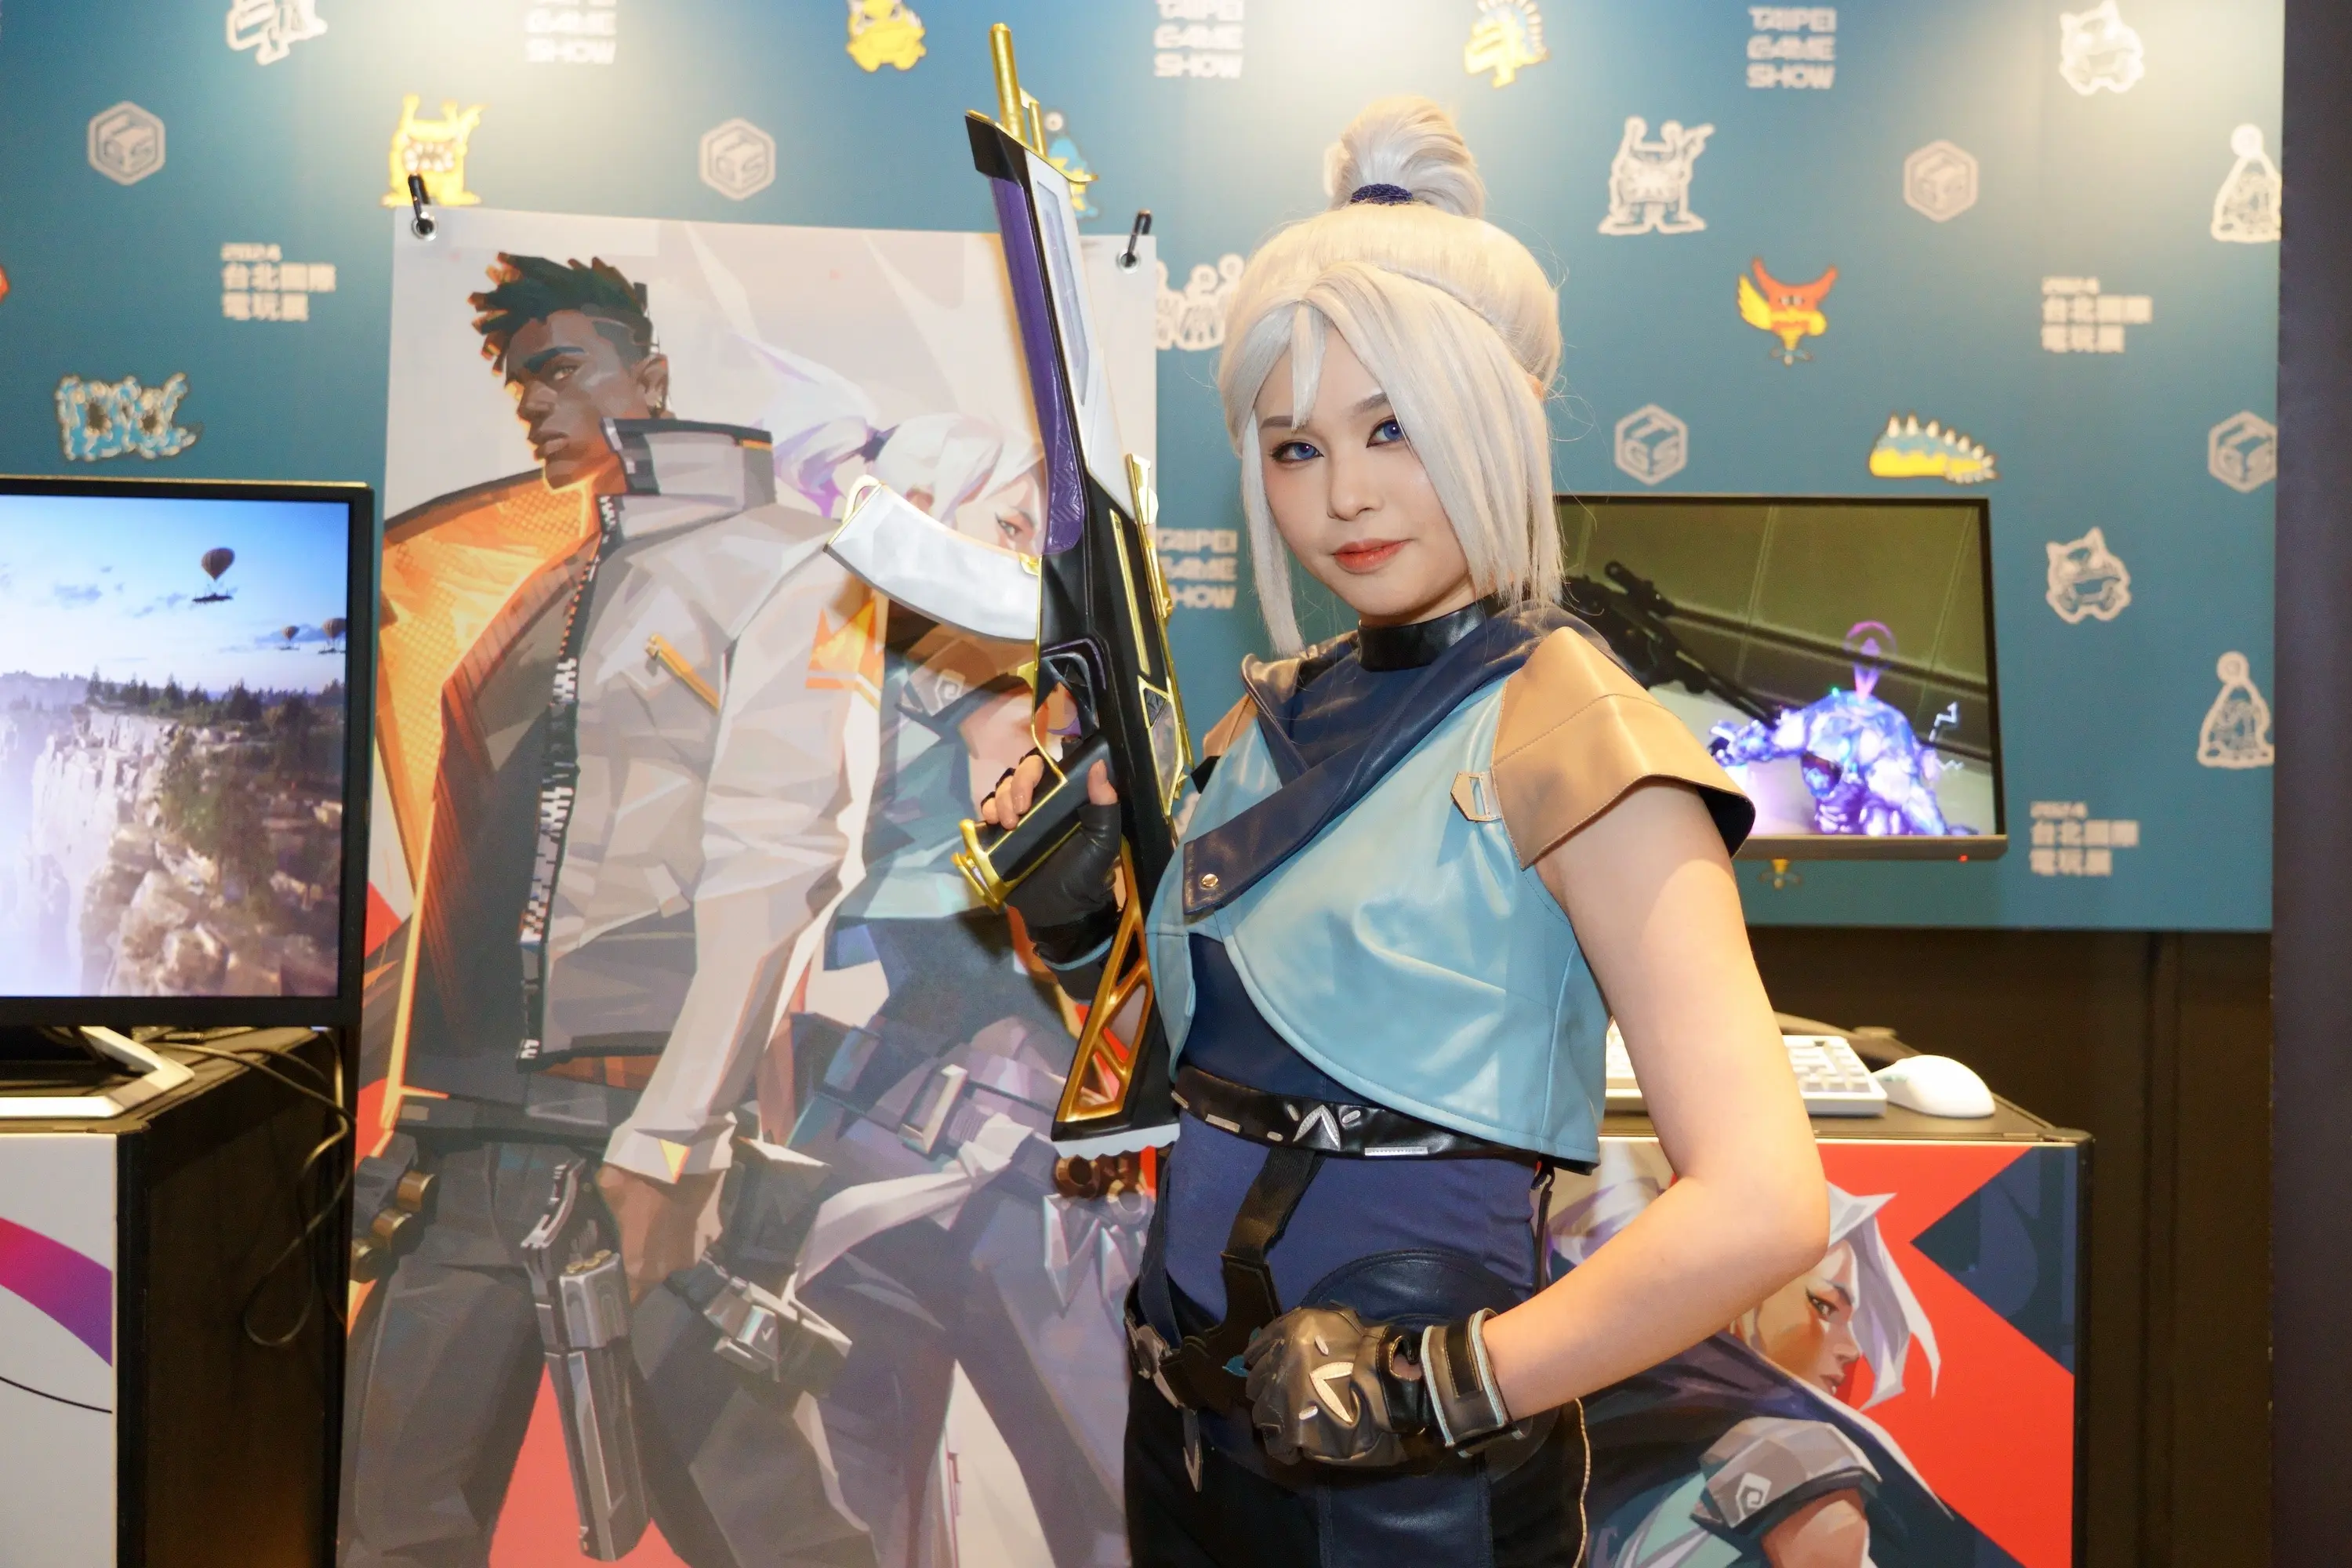 【TpGS24】台北国际电玩展1/25盛大登场南港双层展区同步开启超过300款游戏豪华登场